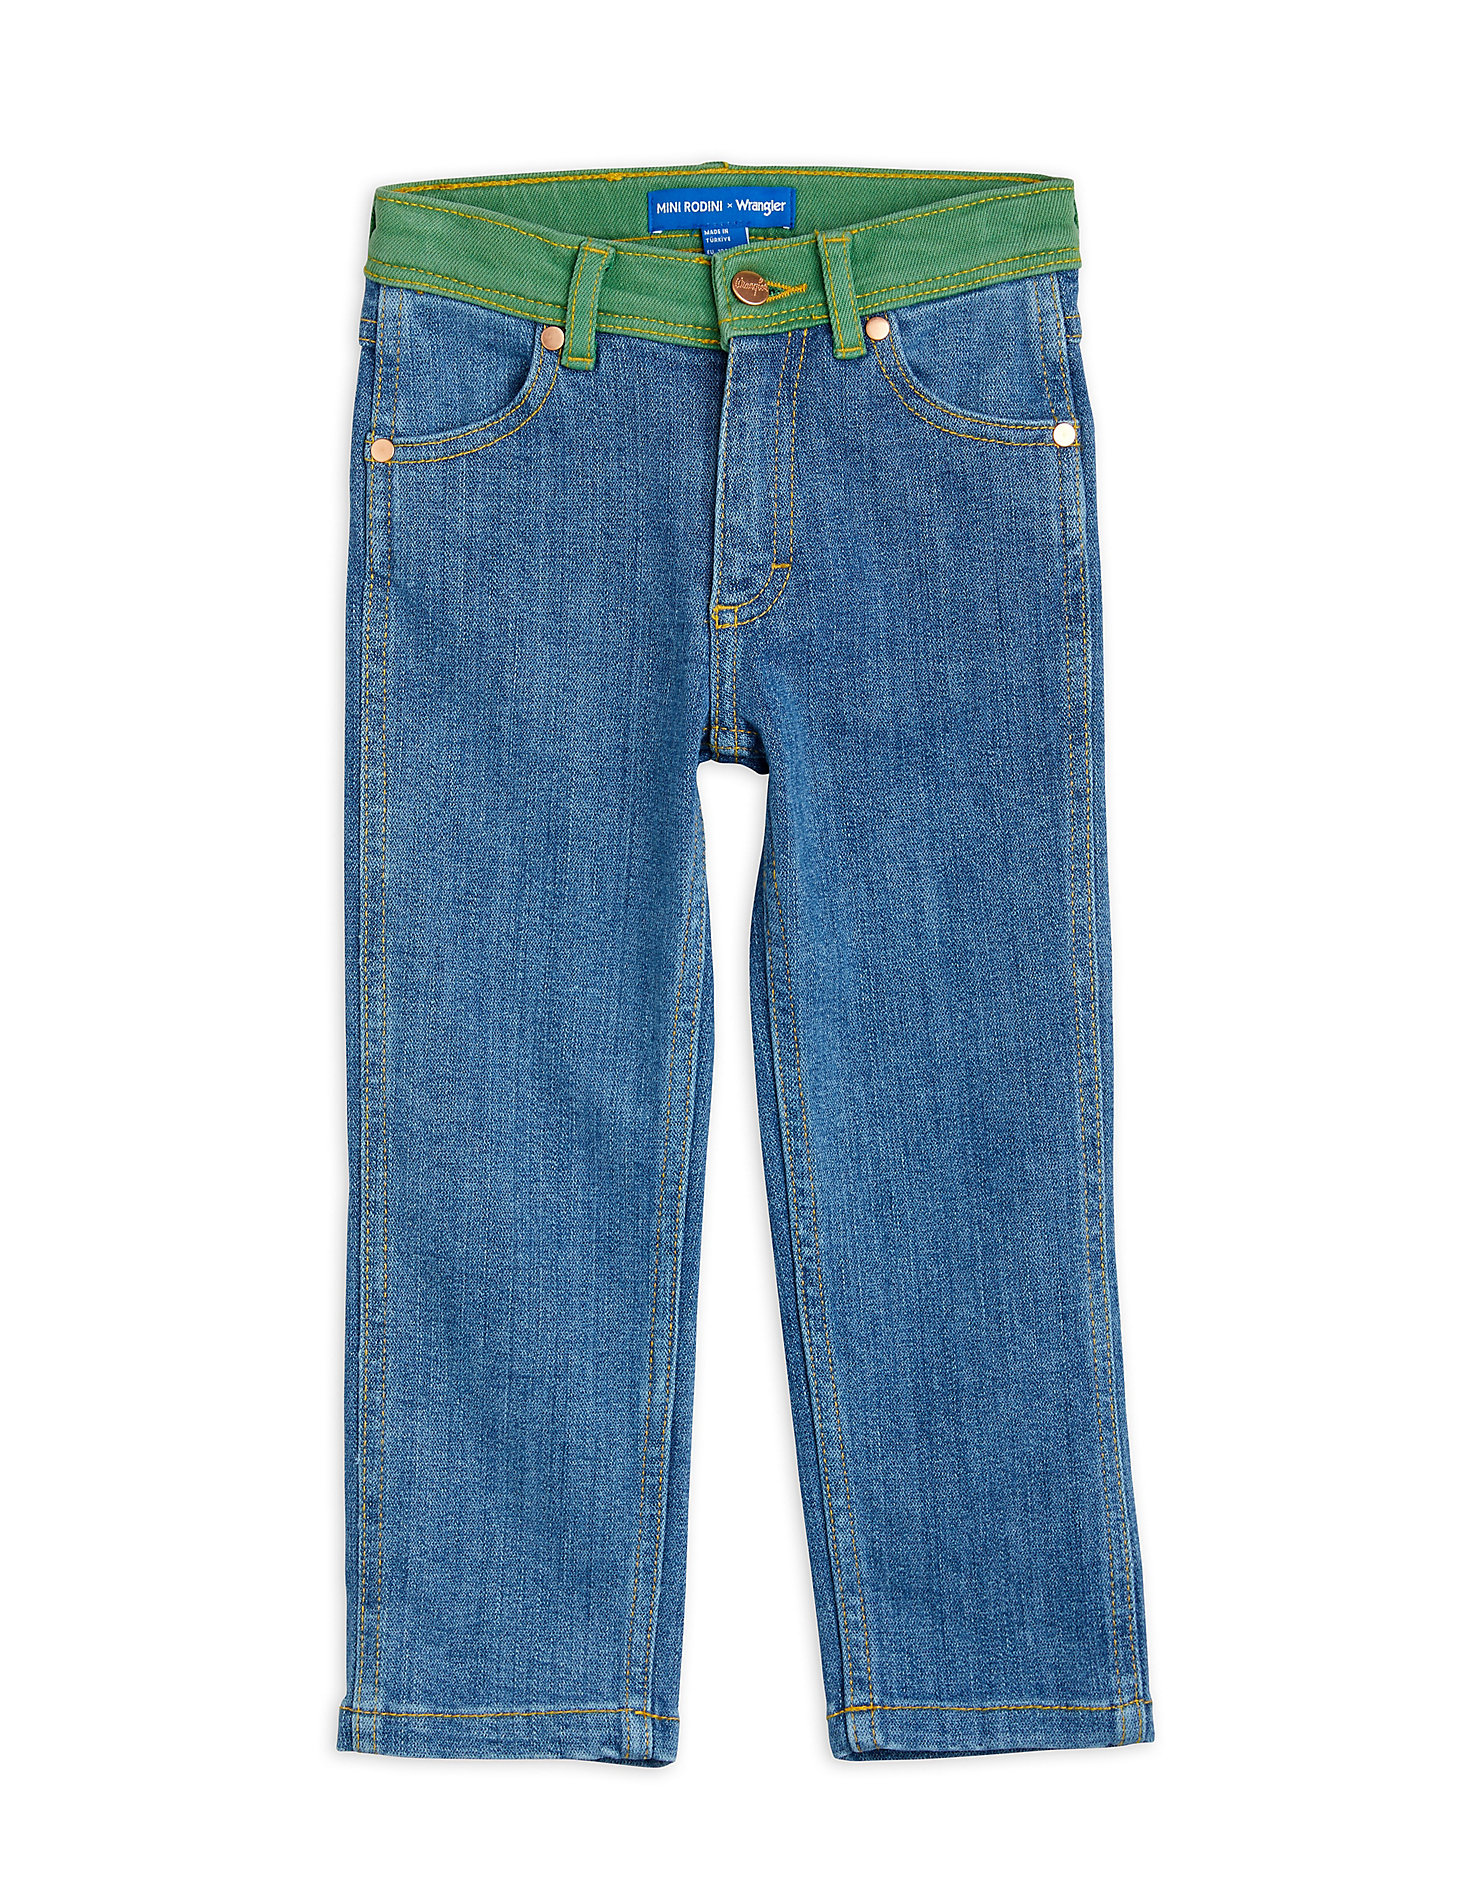 Mini Rodini x Wrangler Two-Tone Denim Straight Jeans in Blue alternative view 2